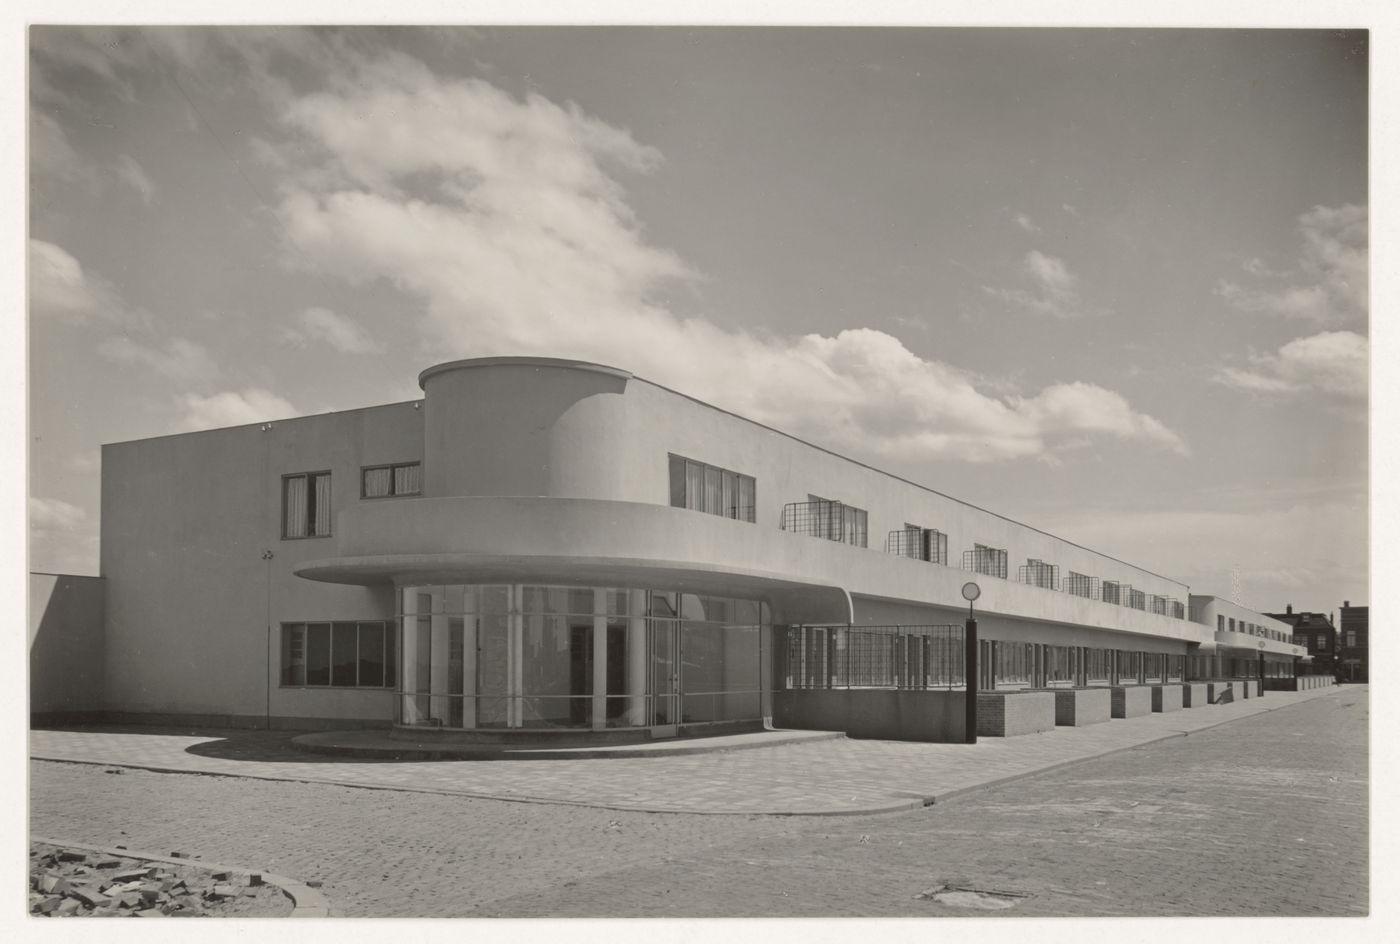 View of the principal façade of industrial row houses showing a corner store, Hoek van Holland, Netherlands